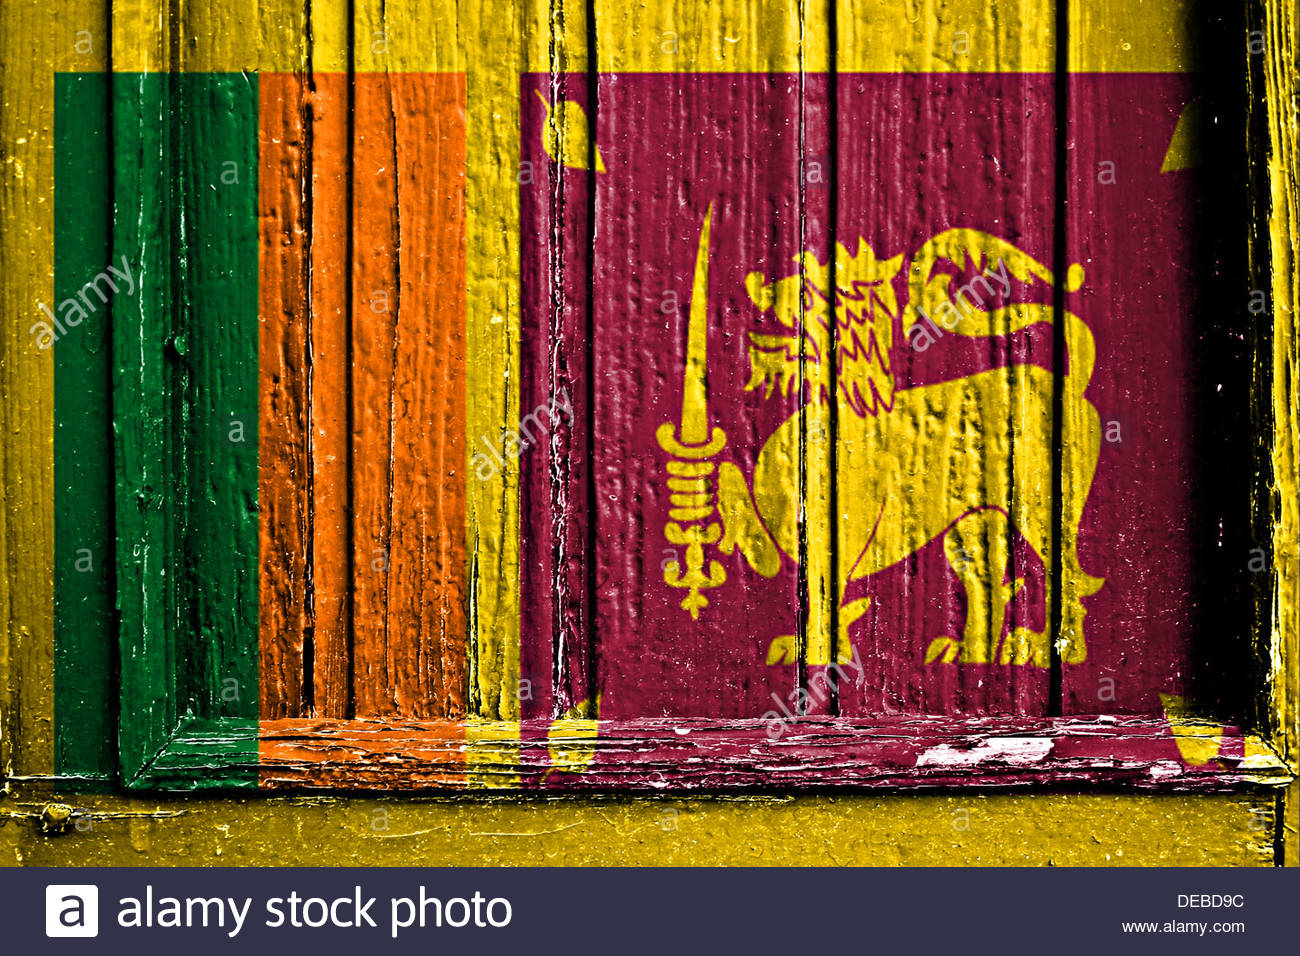 Sri Lanka Flag Wallpaper Stock Photos